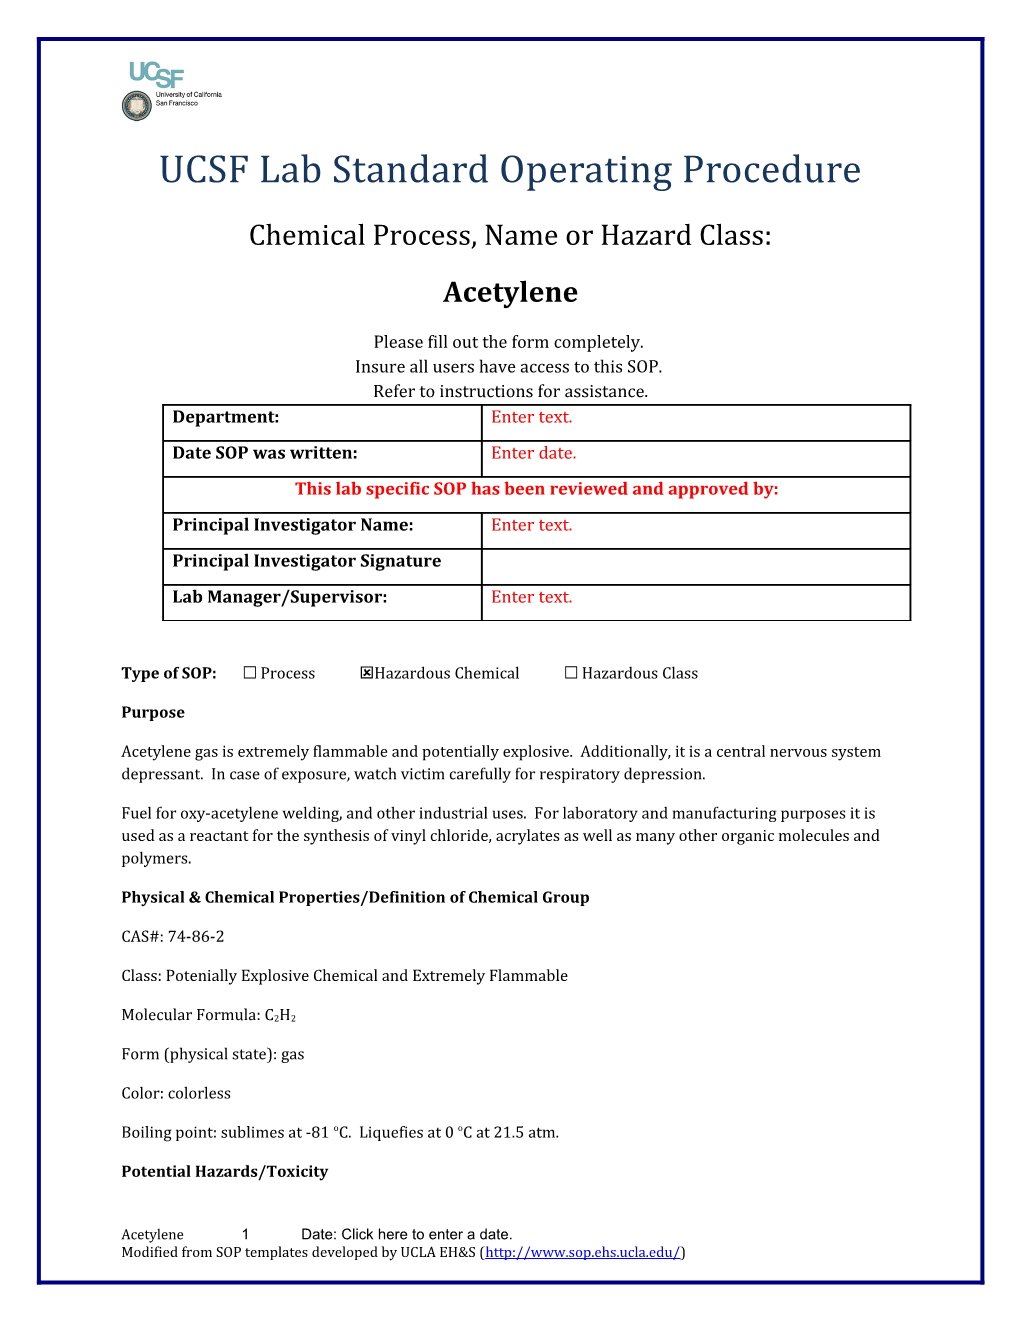 UCSF Lab Standard Operating Procedure s23